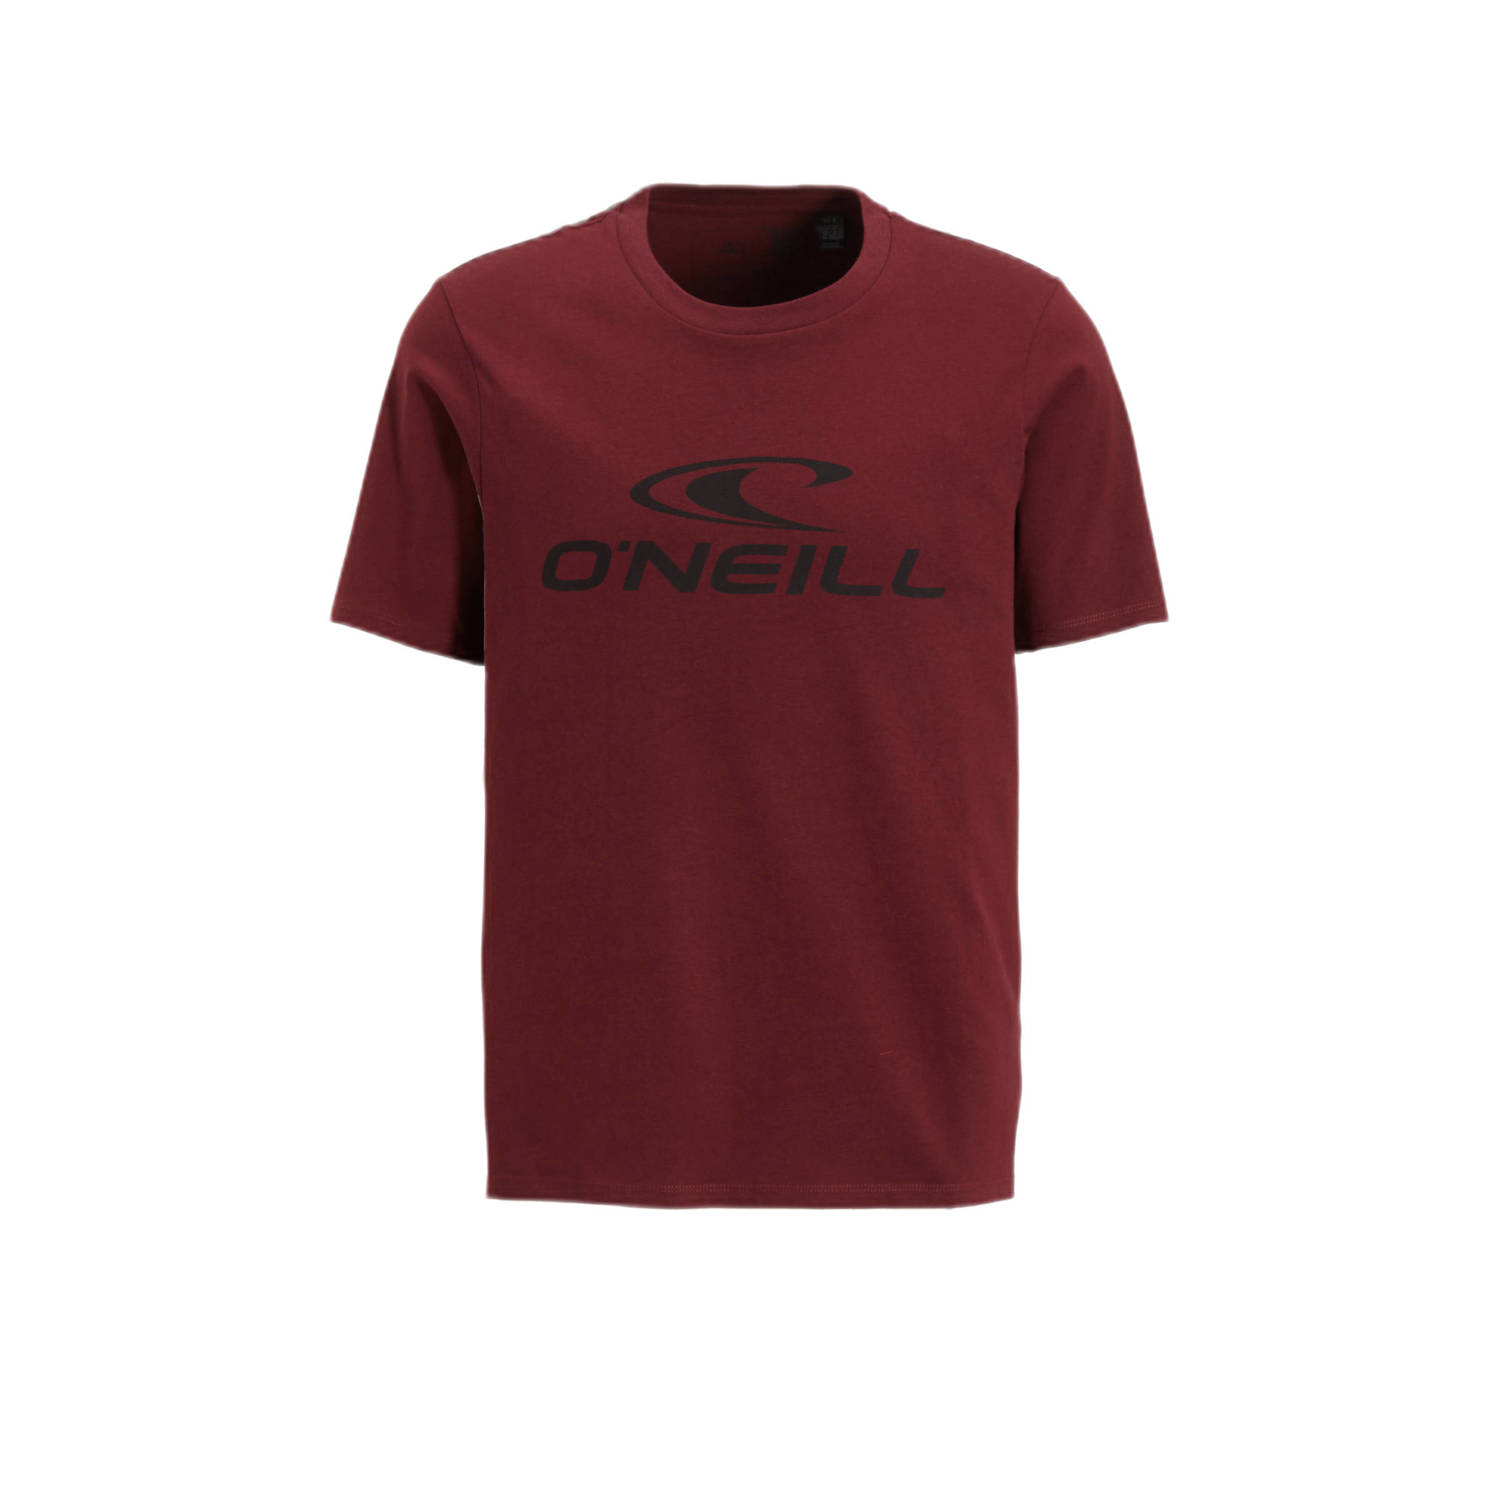 O'Neill T-shirt met printopdruk bordeaux